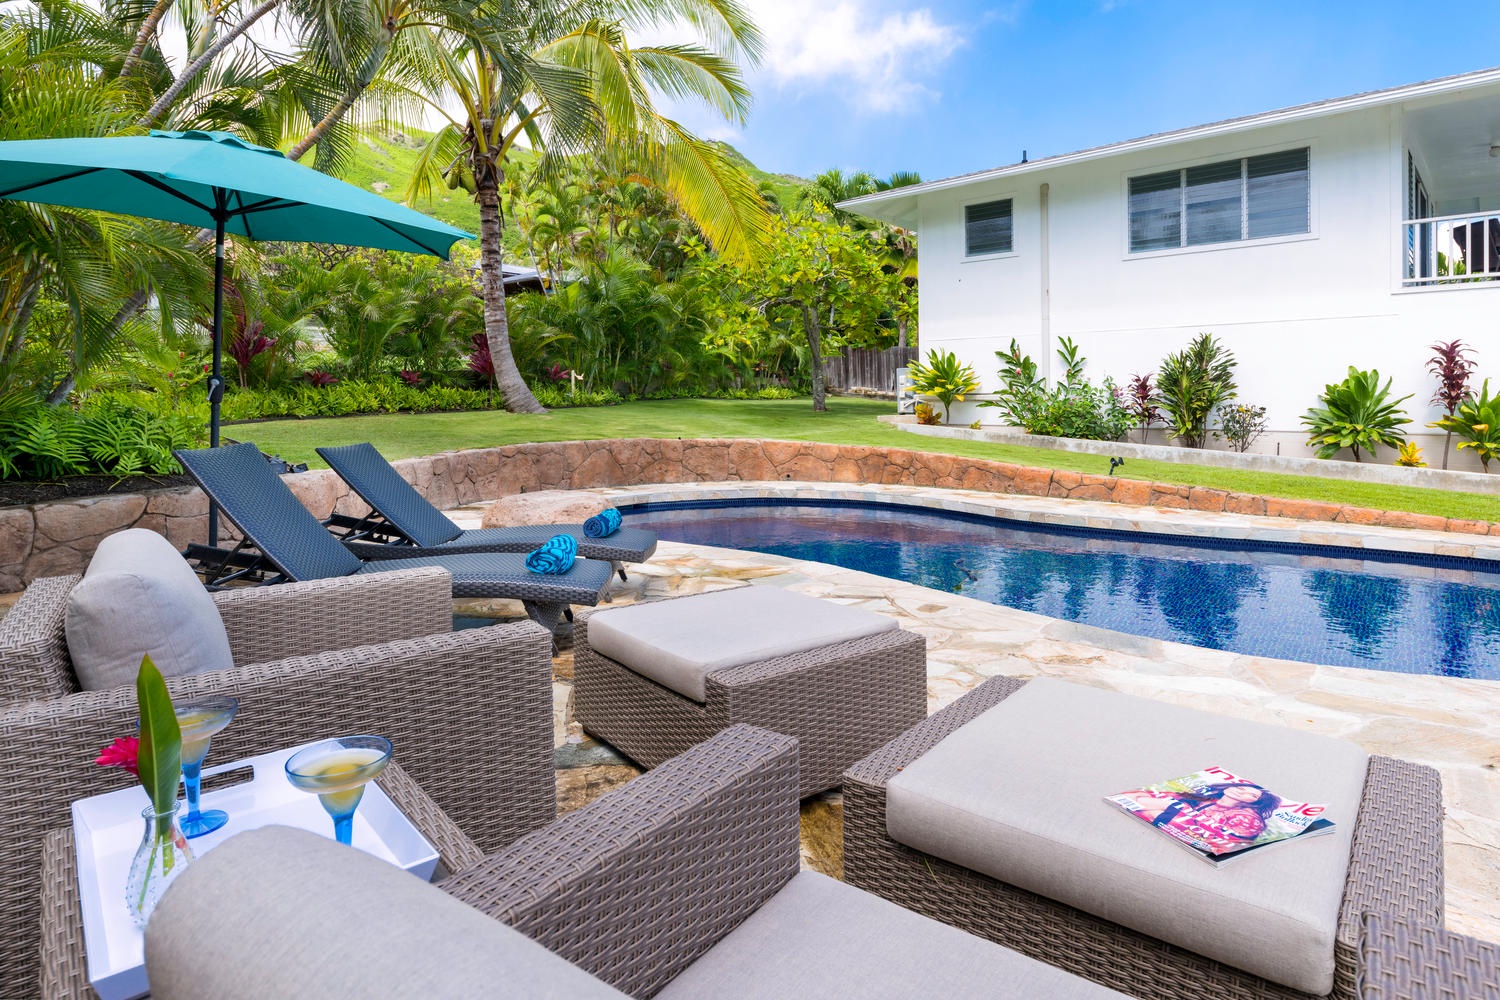 Kailua Vacation Rentals, Lanikai Cottage - Brand new in-ground pool!